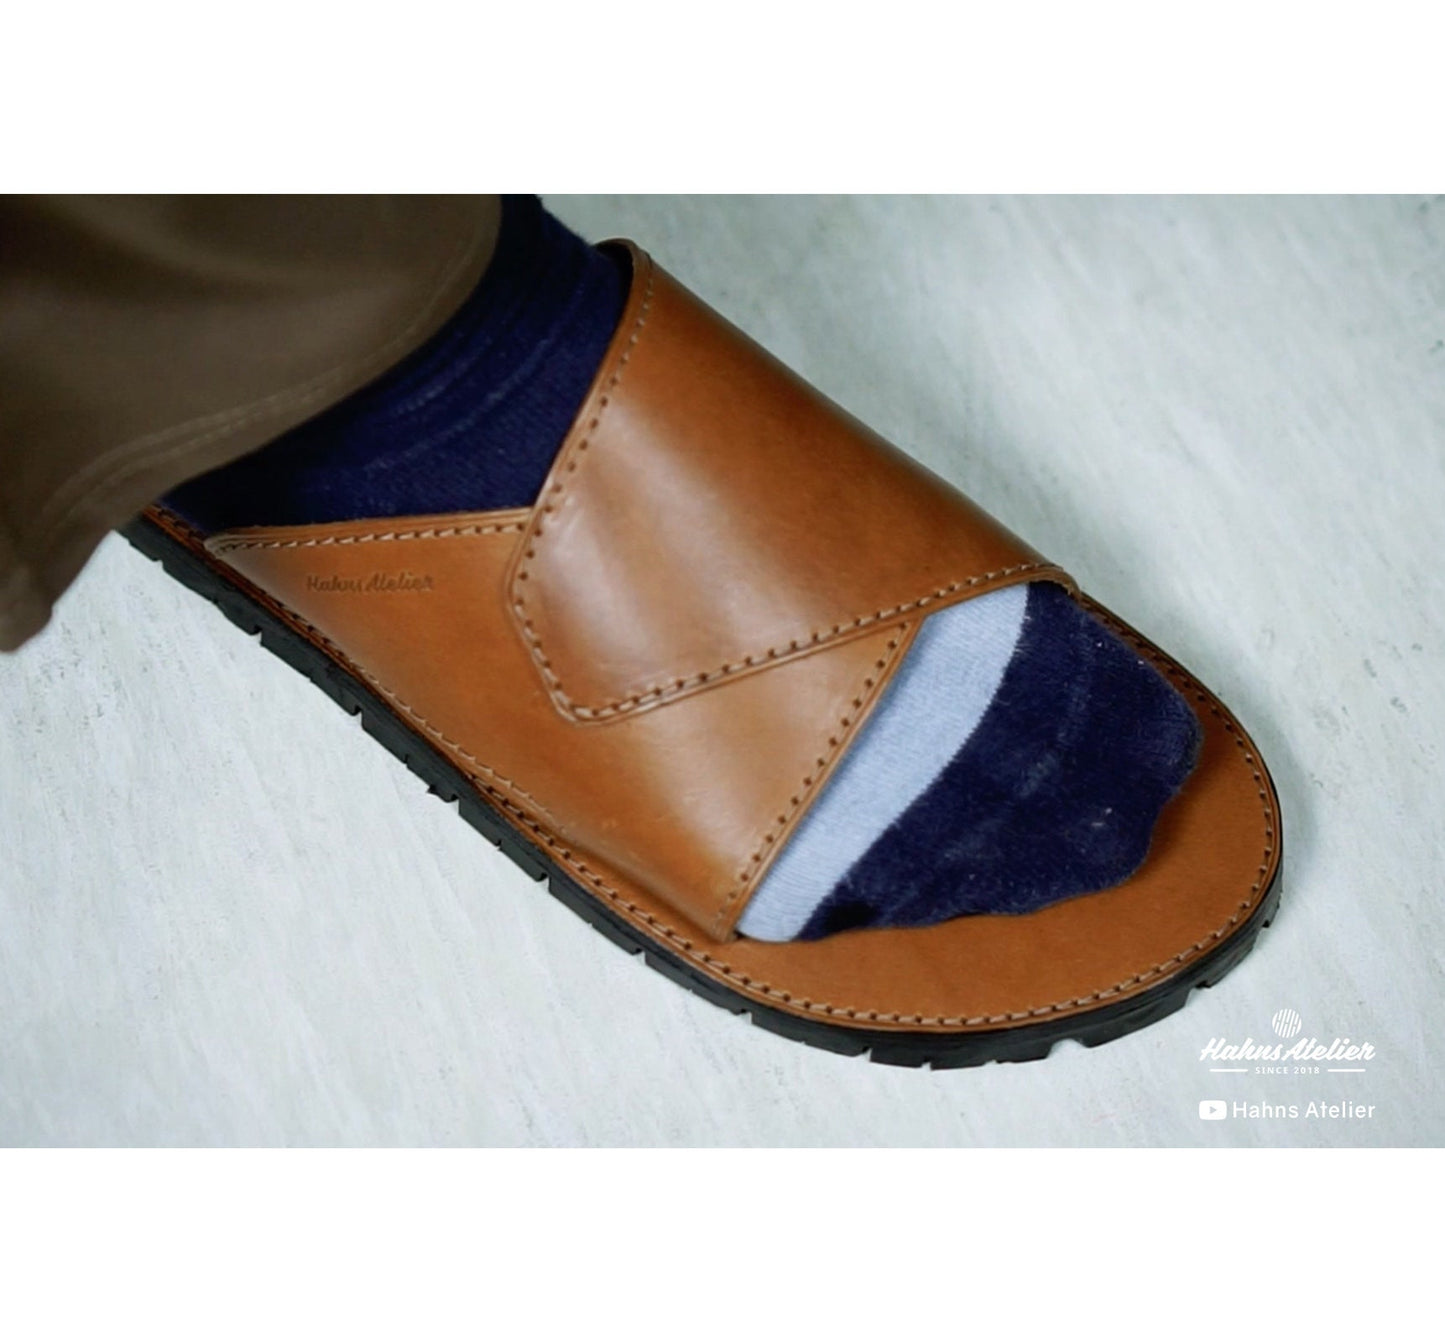 Sandals PDF pattern